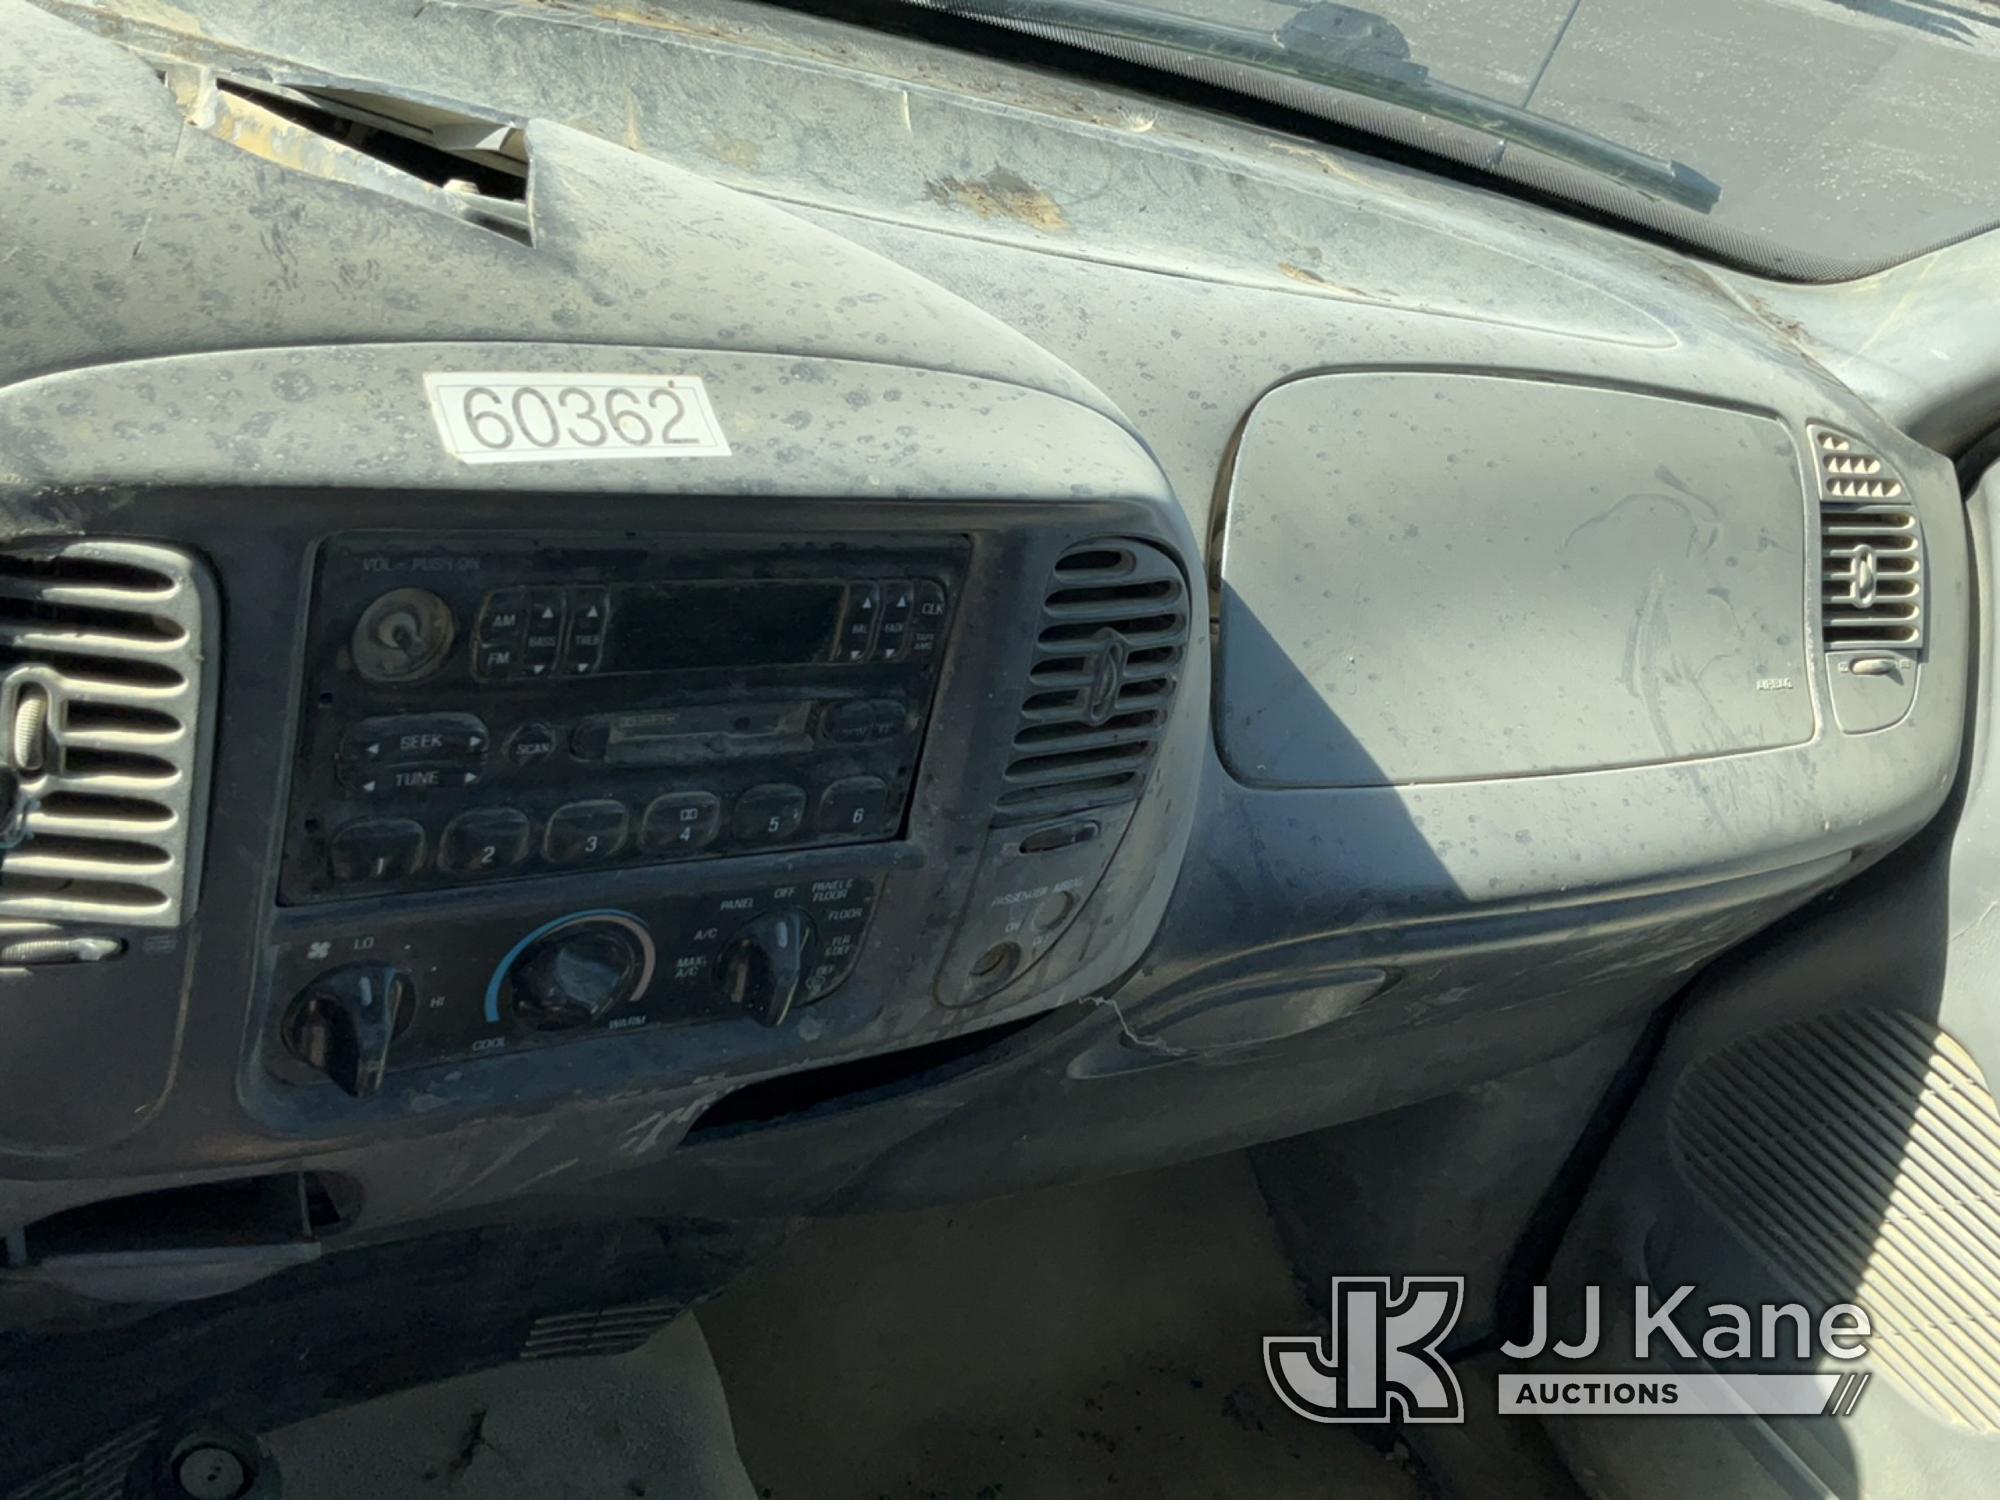 (Jurupa Valley, CA) 1999 Ford F150 4x4 Pickup Truck Not Running, Paint Damage, True Mileage Unknown